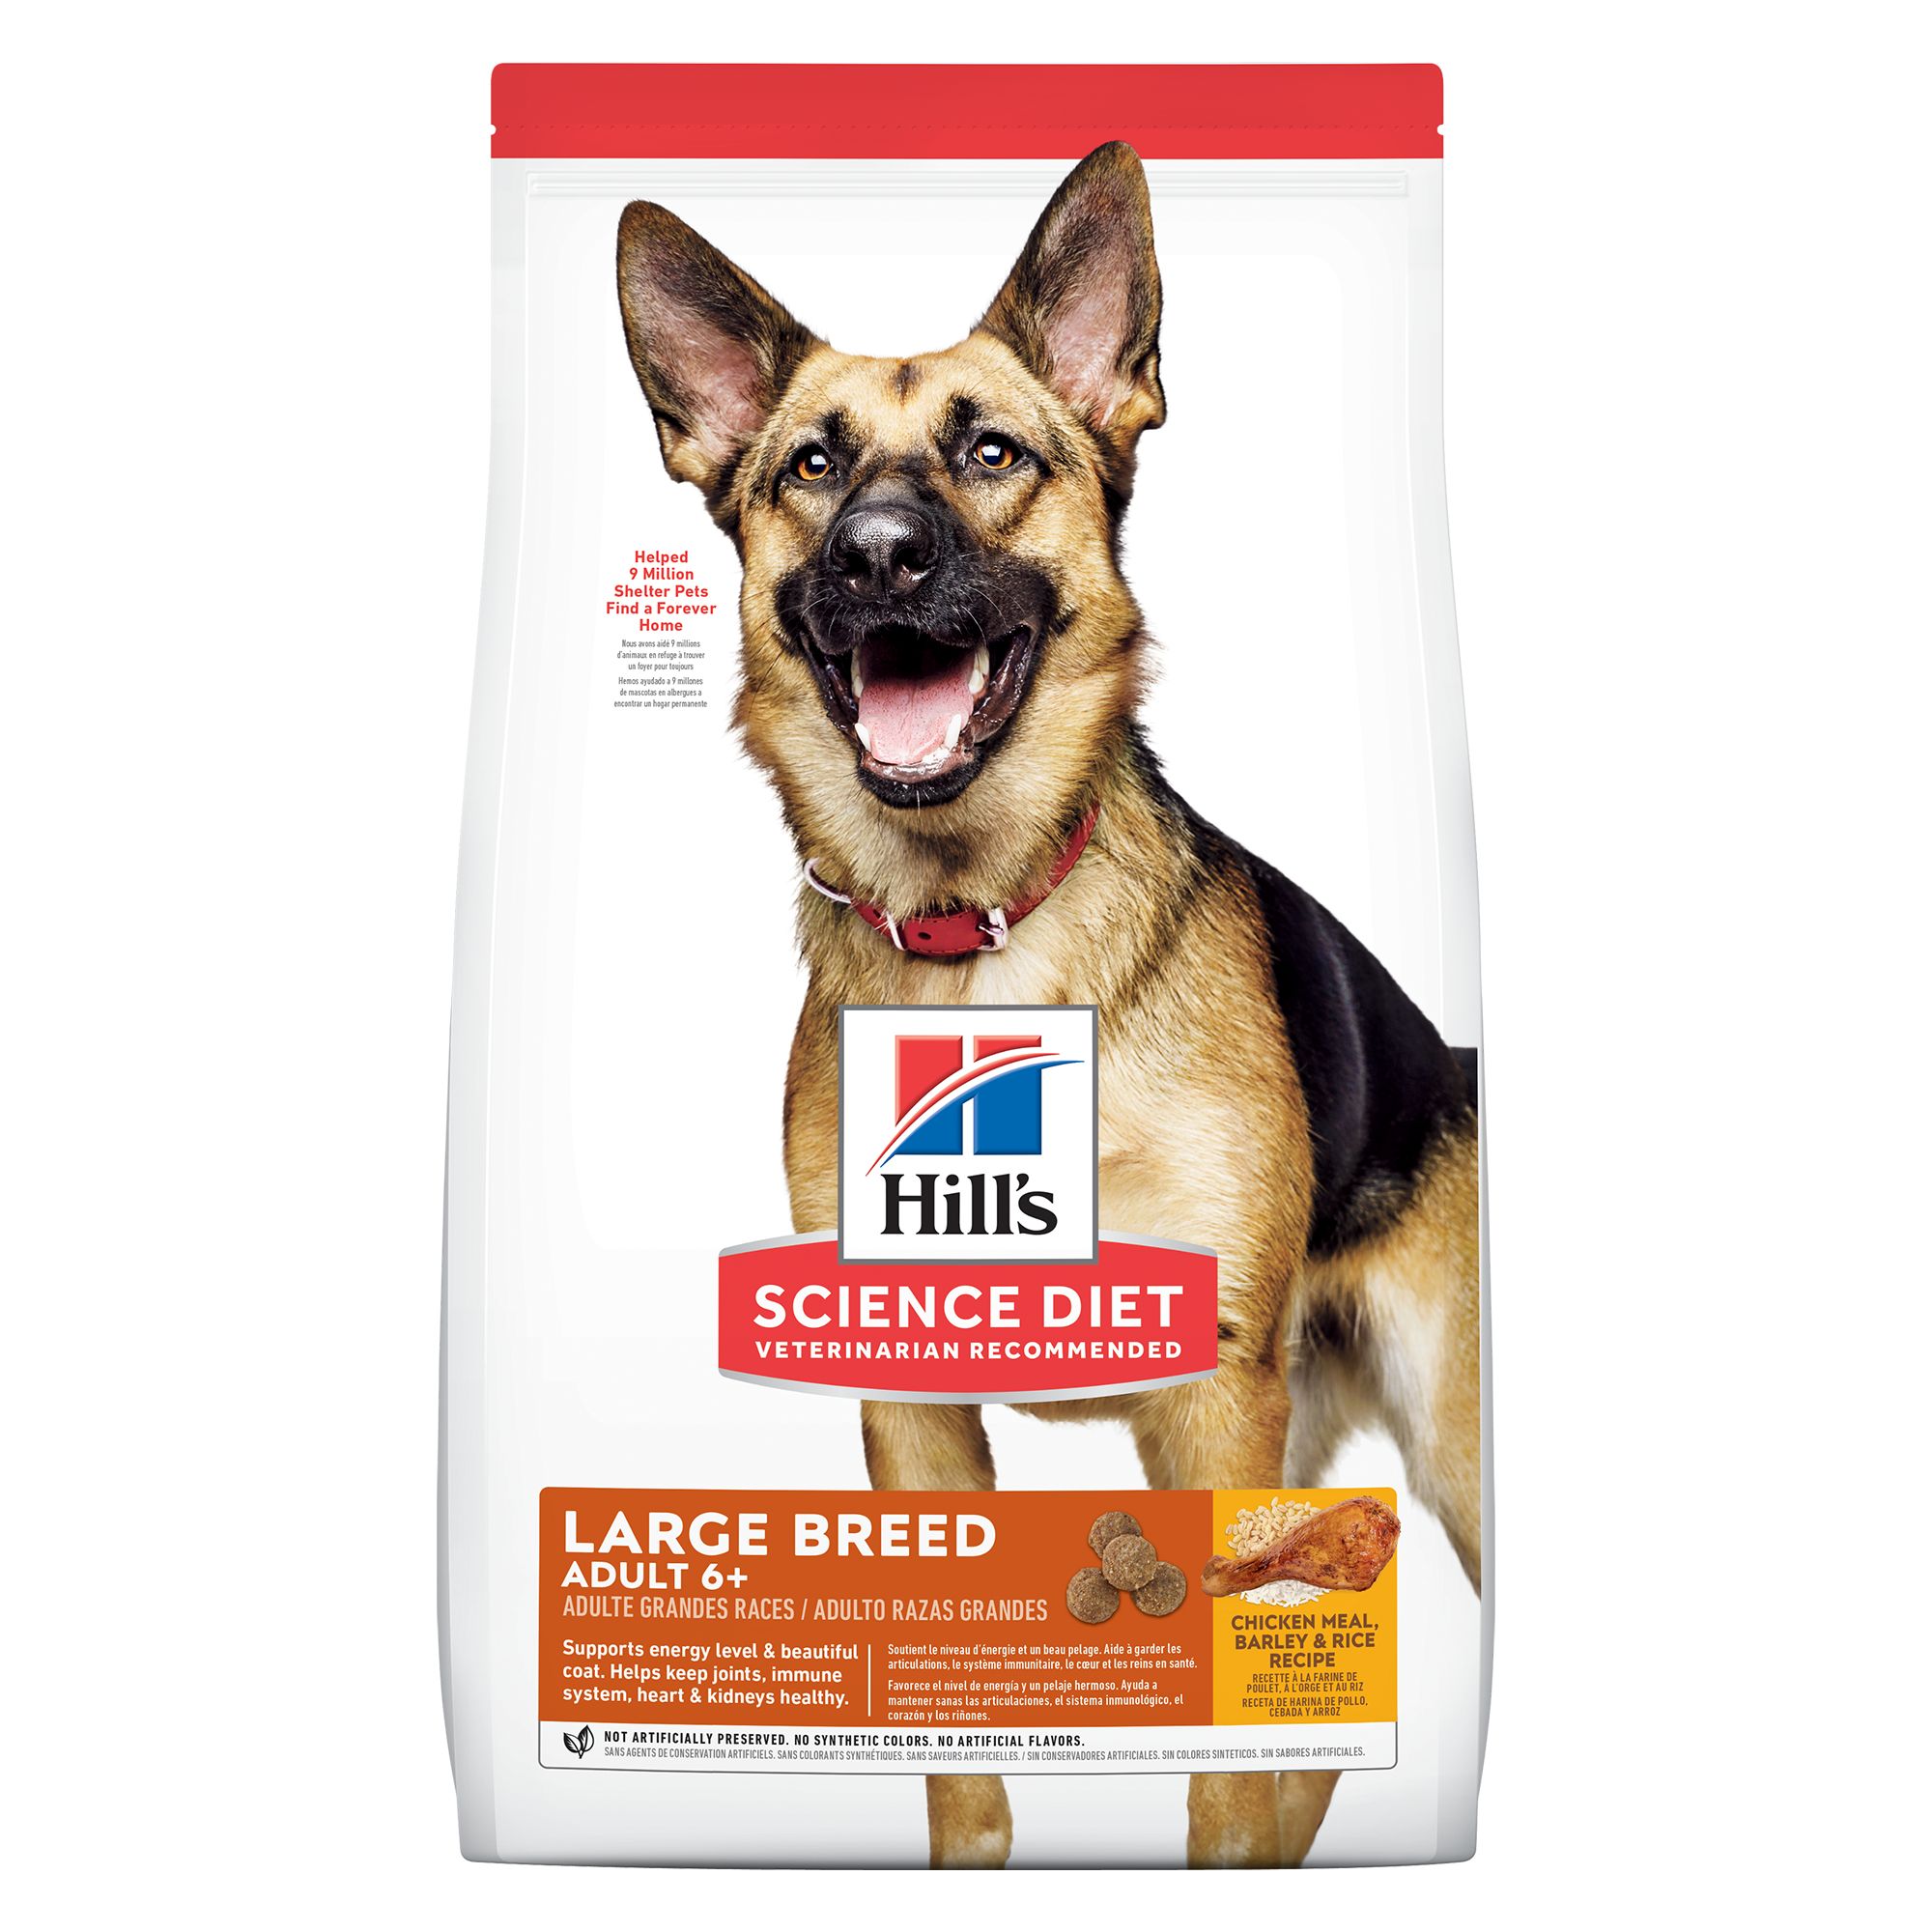 hills active longevity dog food